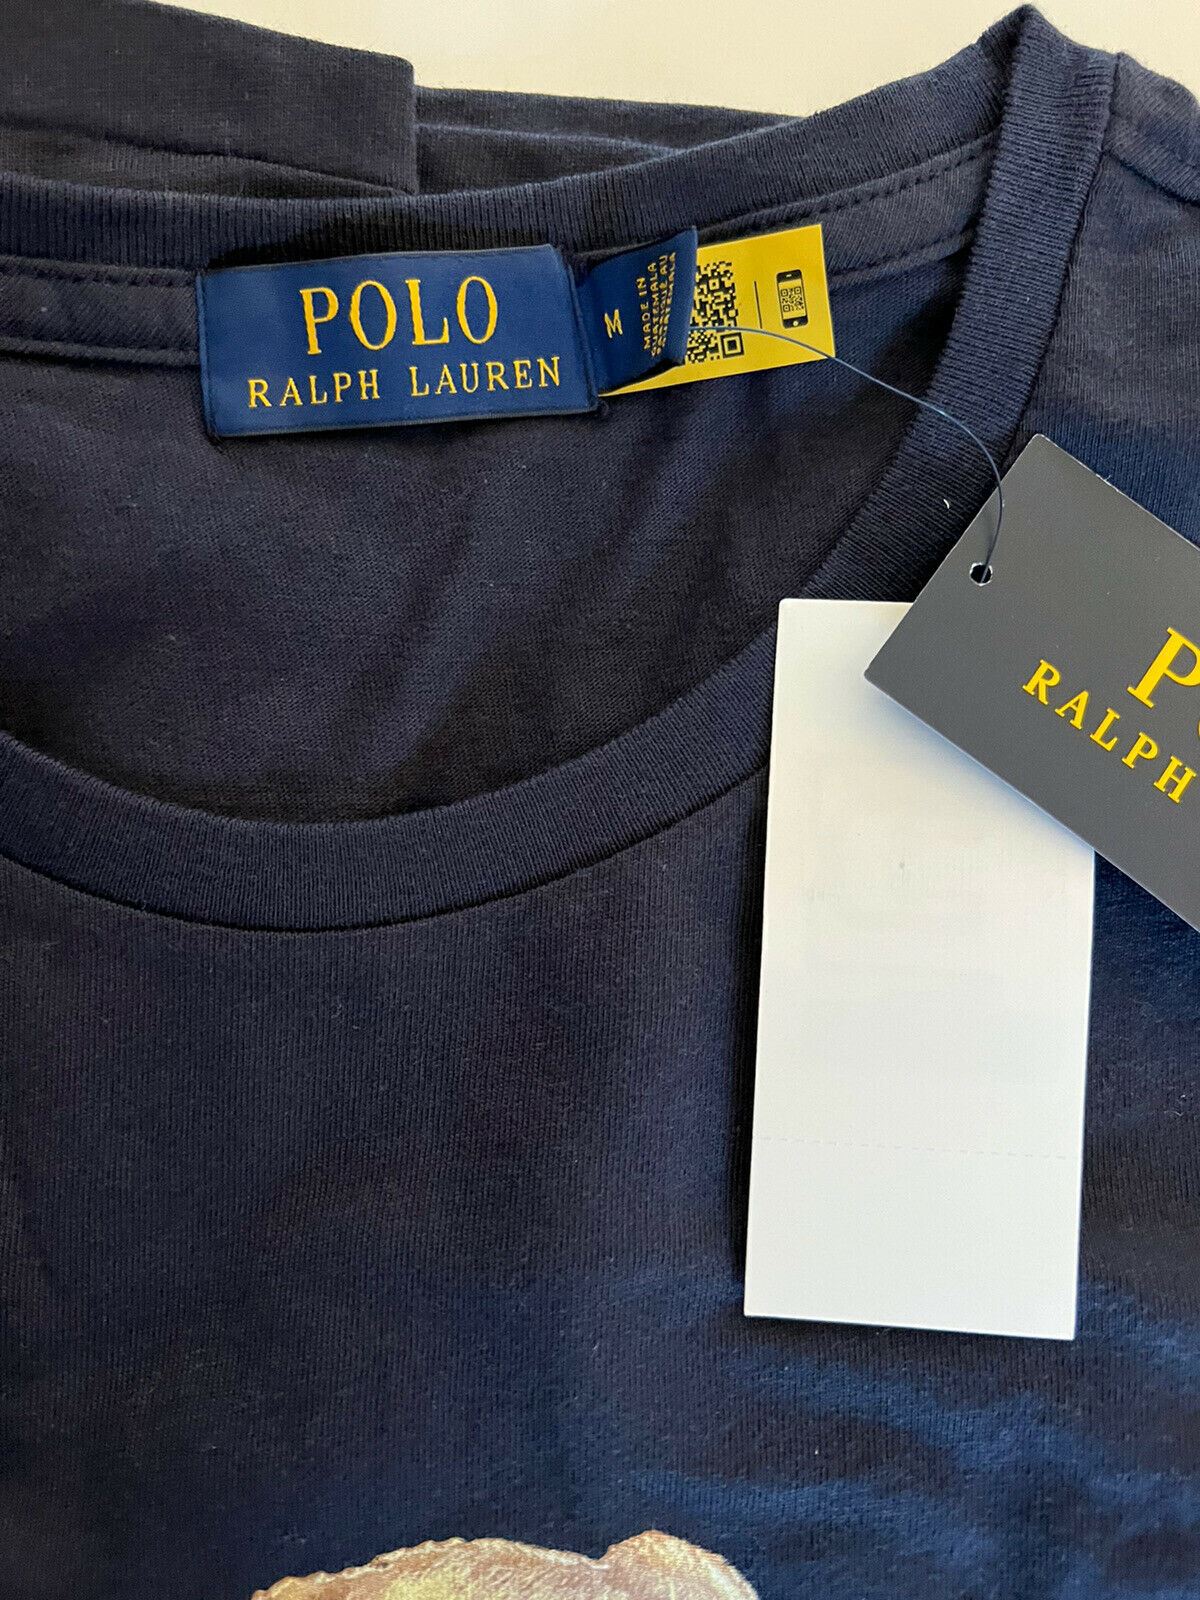 Neu mit Etikett: 59,50 Polo Ralph Lauren Bear T-Shirt Blau Medium